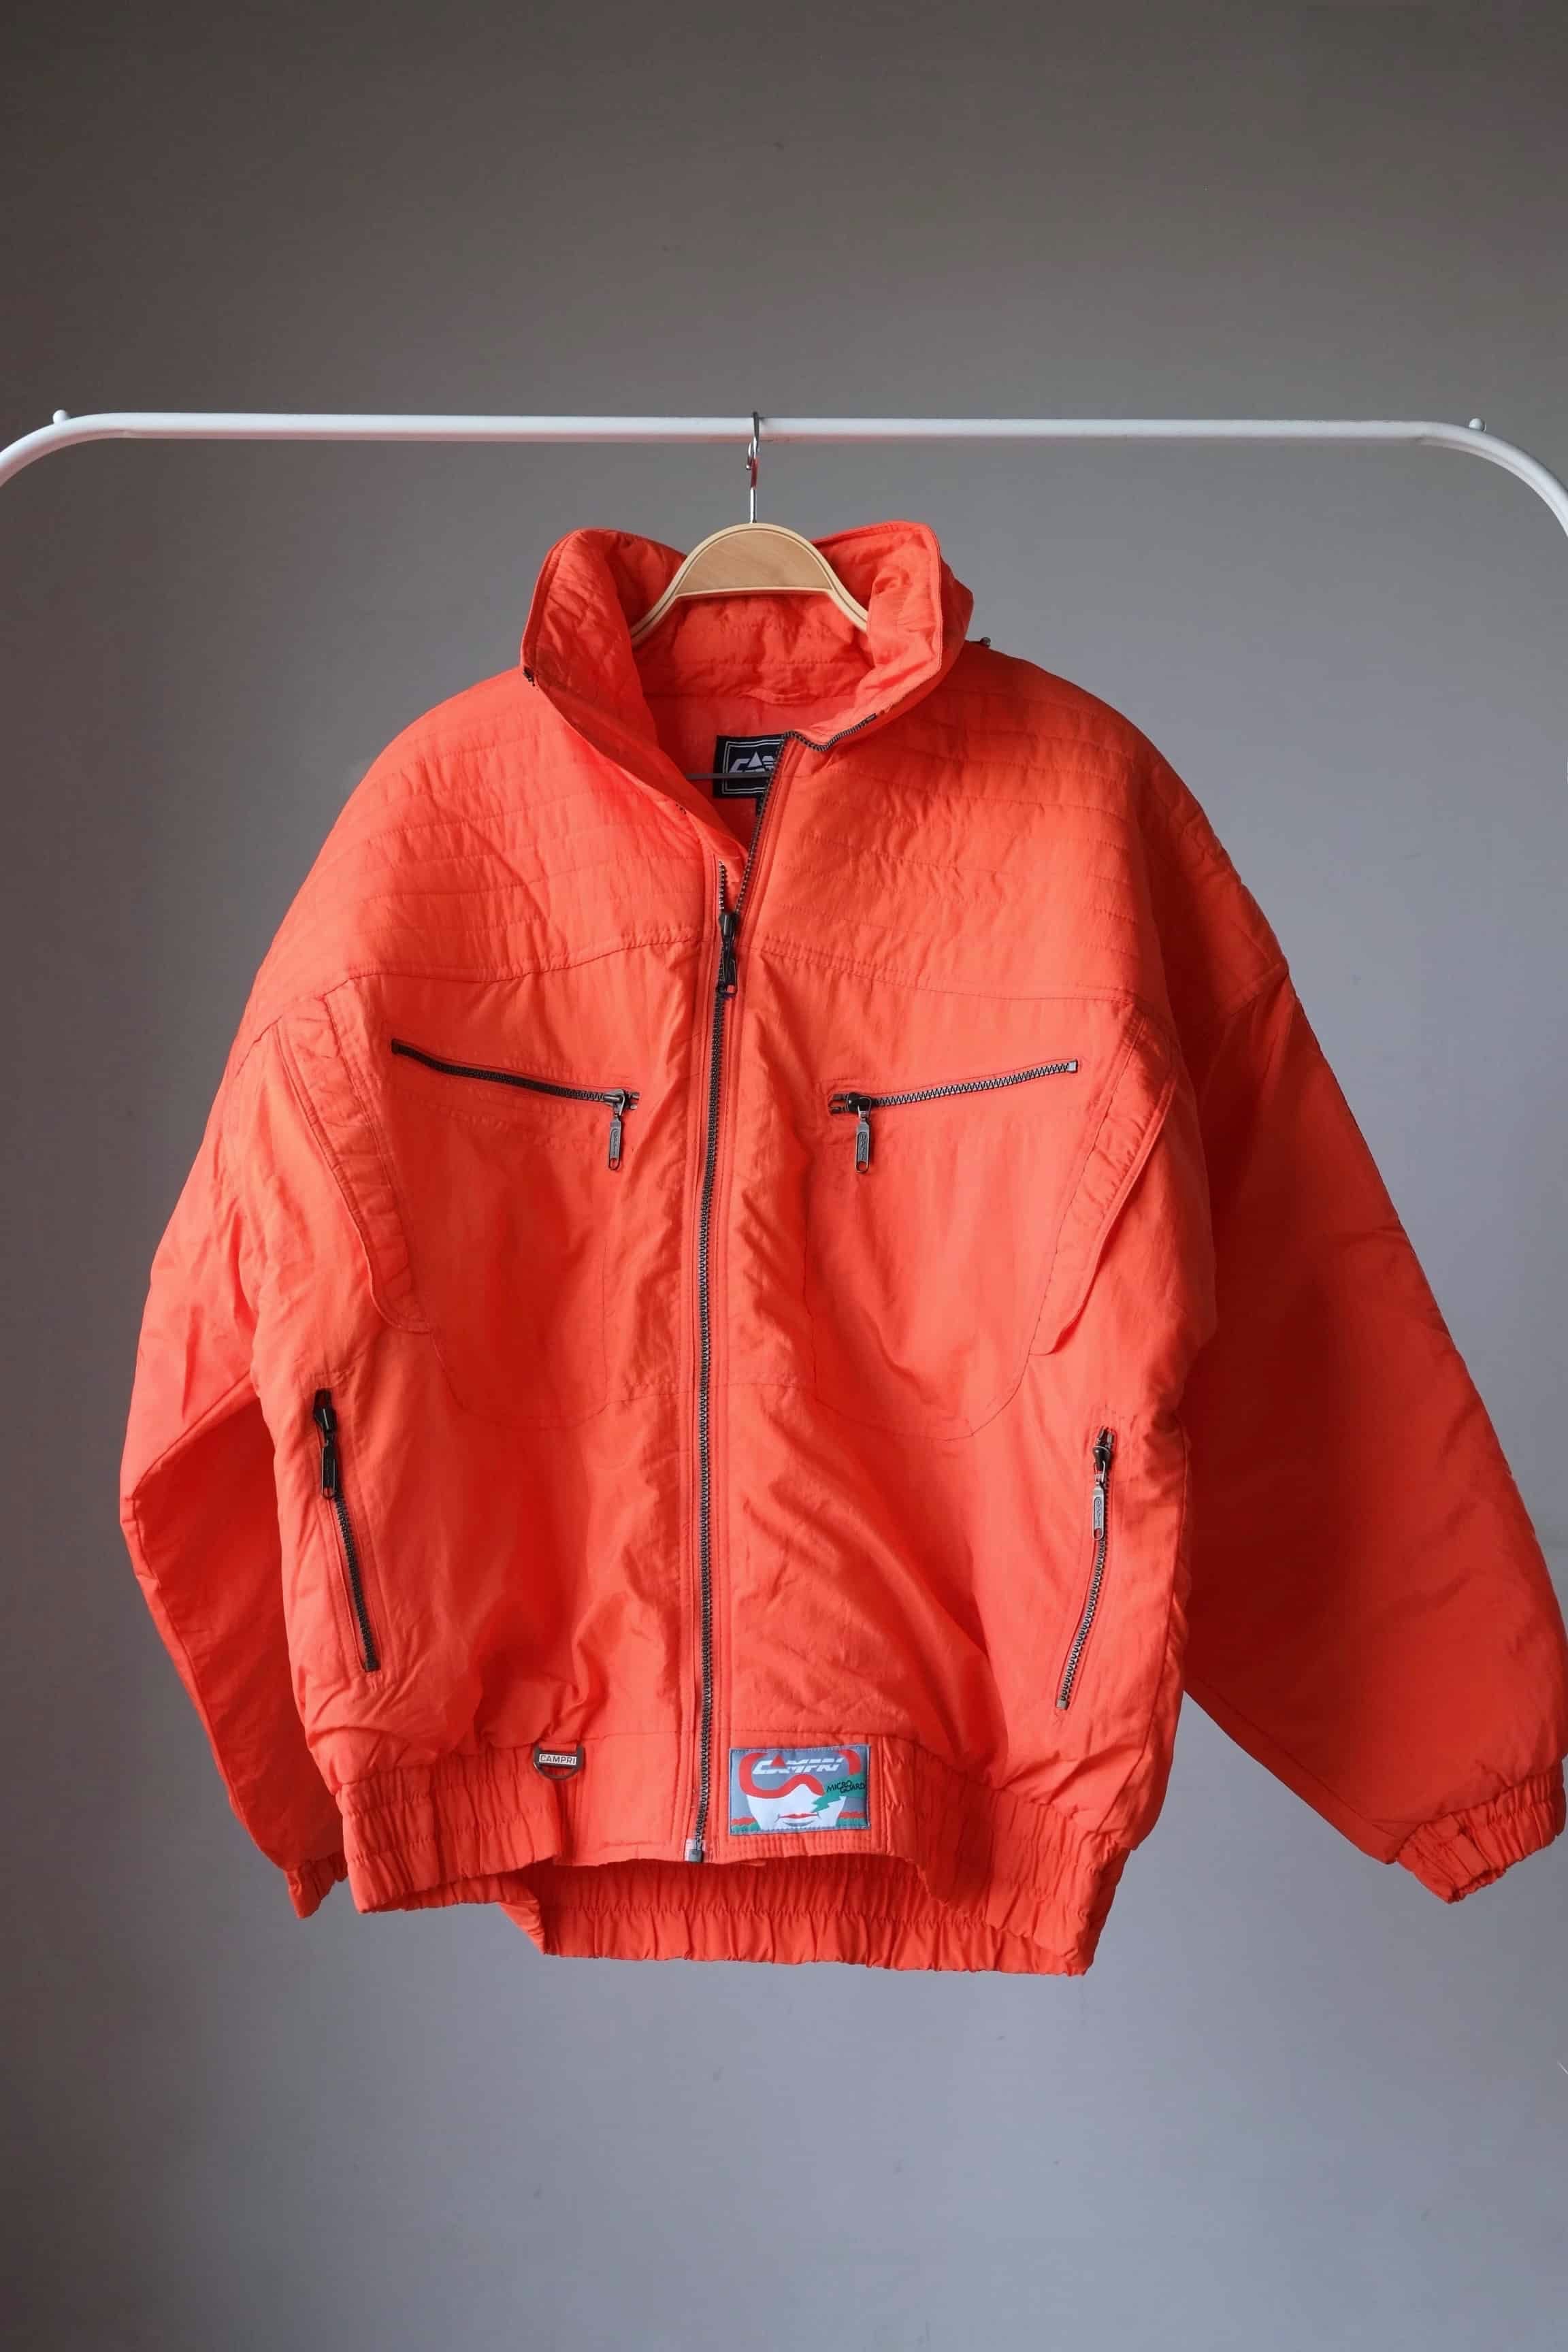 Campri Igls Neon 90's Ski Jacket